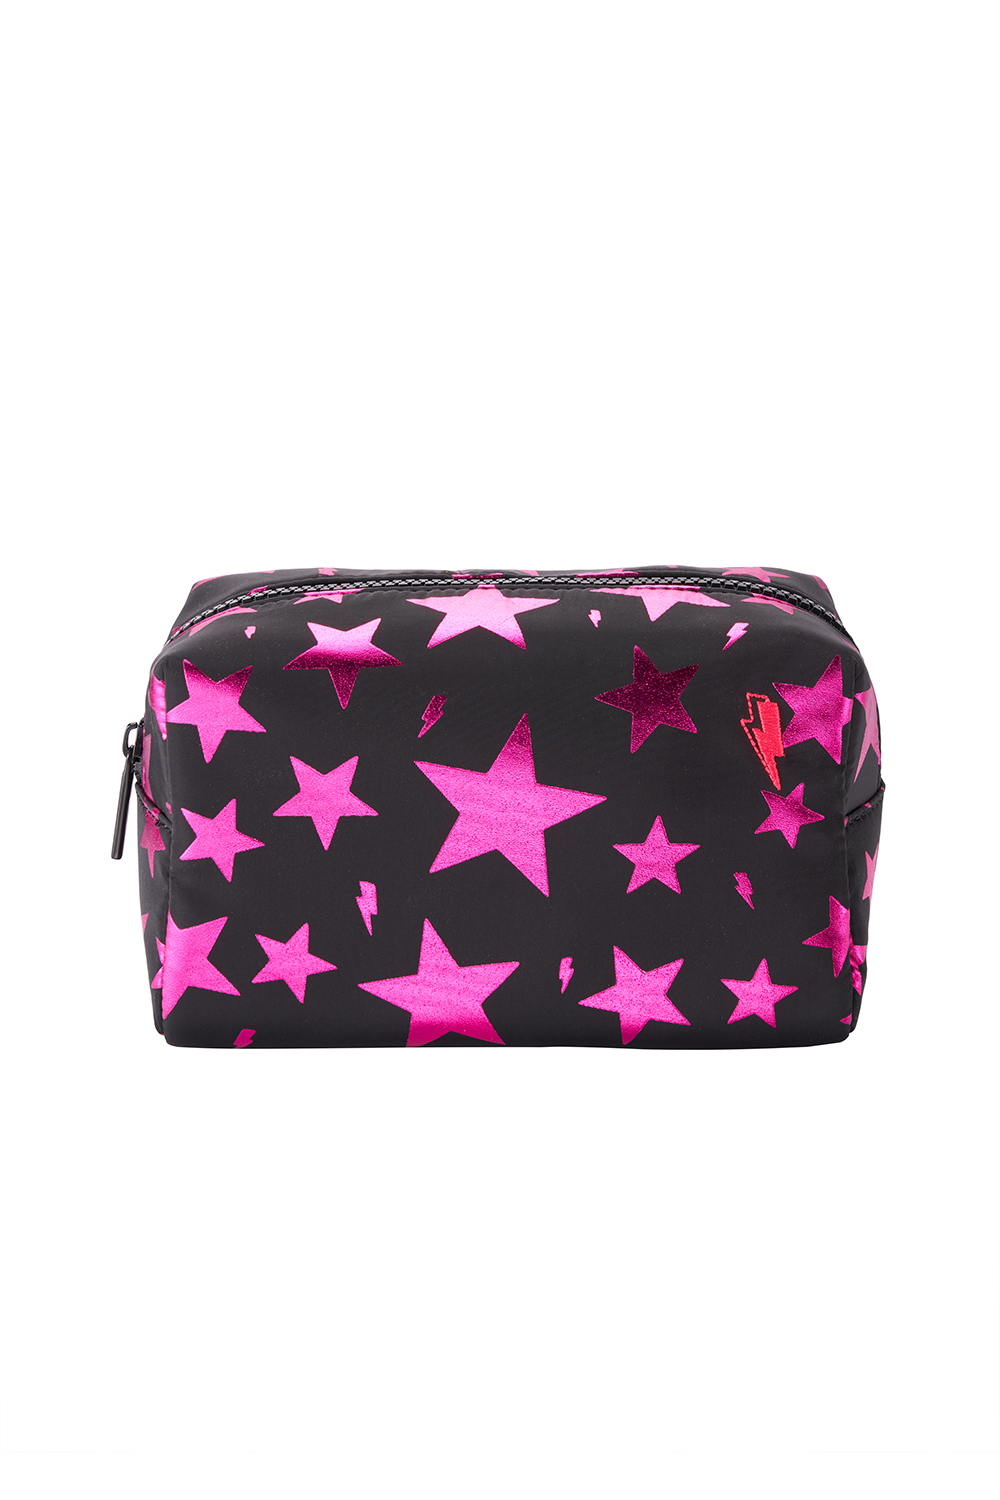 Scamp & Dude x Adeola Gboyega Black with Pink Foil Star Makeup Bag